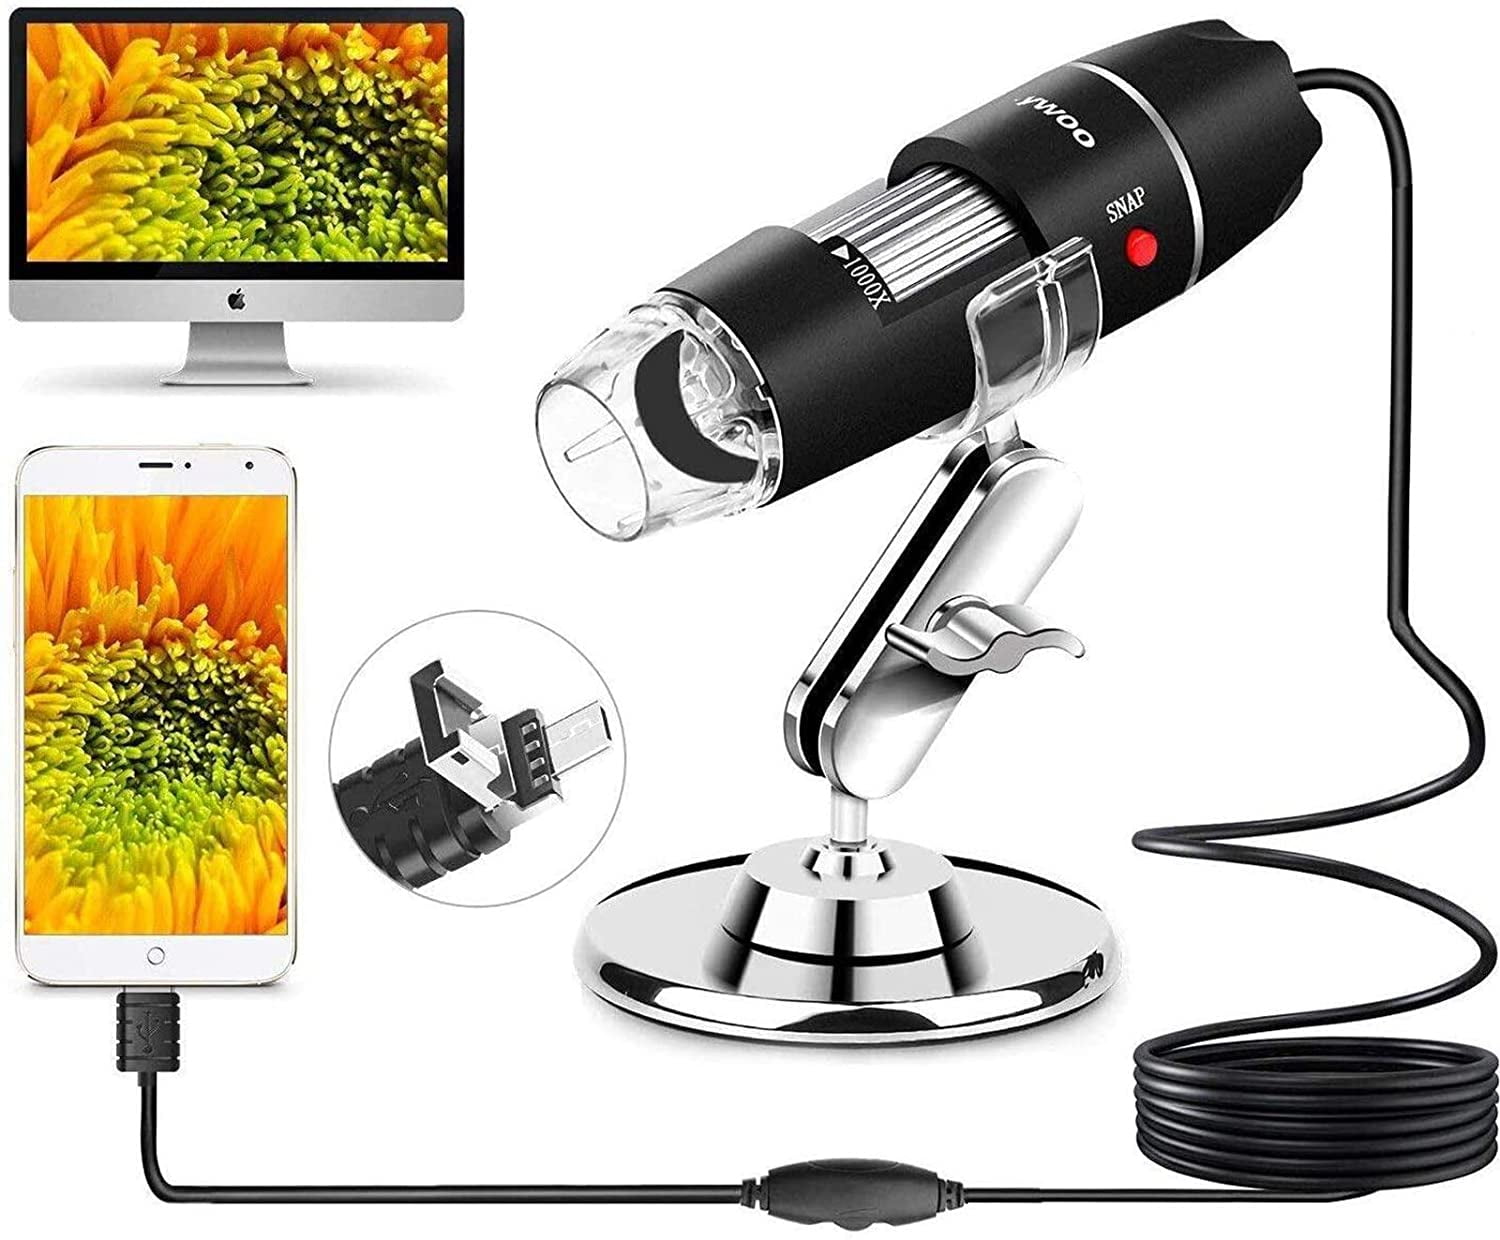 Digital Microscope,1000X 8 Led USB Powered Digital Microscope Endoscope Zoom Camera Magnifier